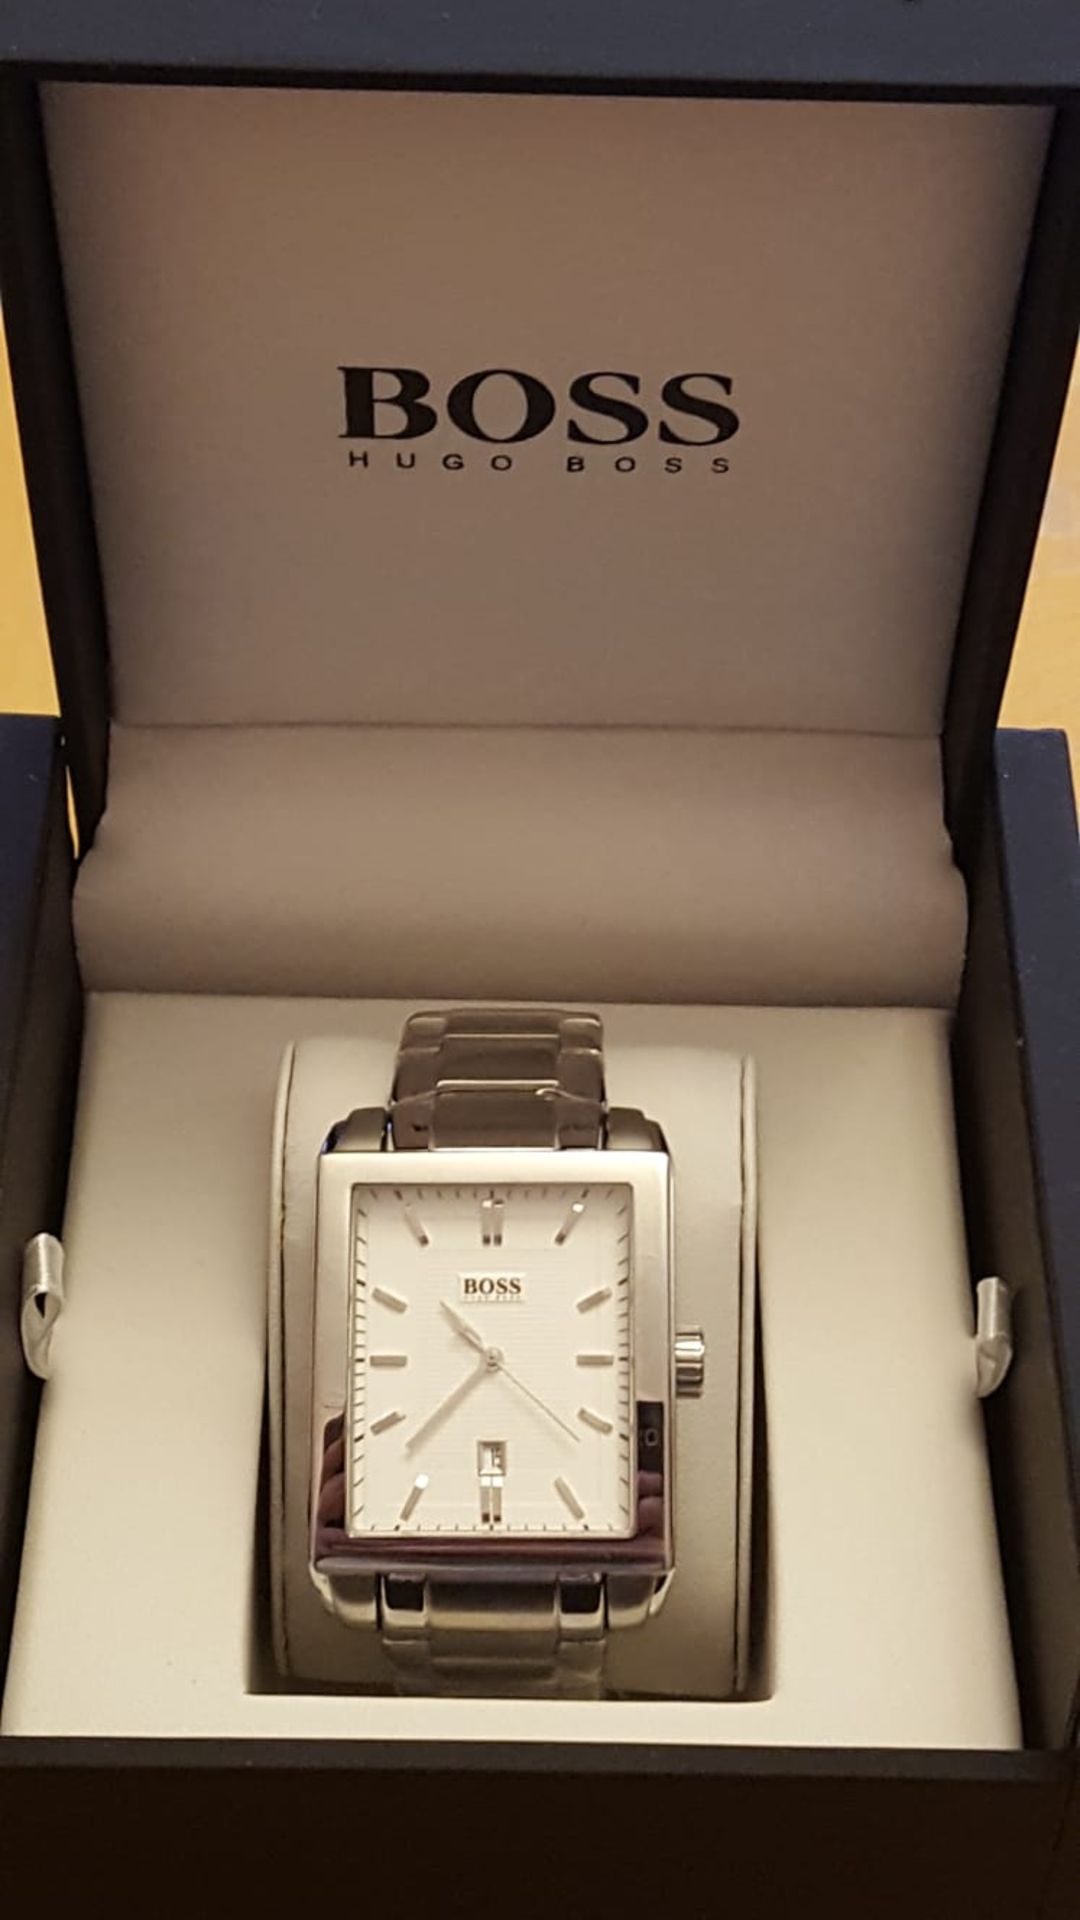 Brand New Hugo Boss Mens Classic åwatch, Hb1512772, Rectangular Stainless Steel Bracelet Watch, - Image 2 of 2